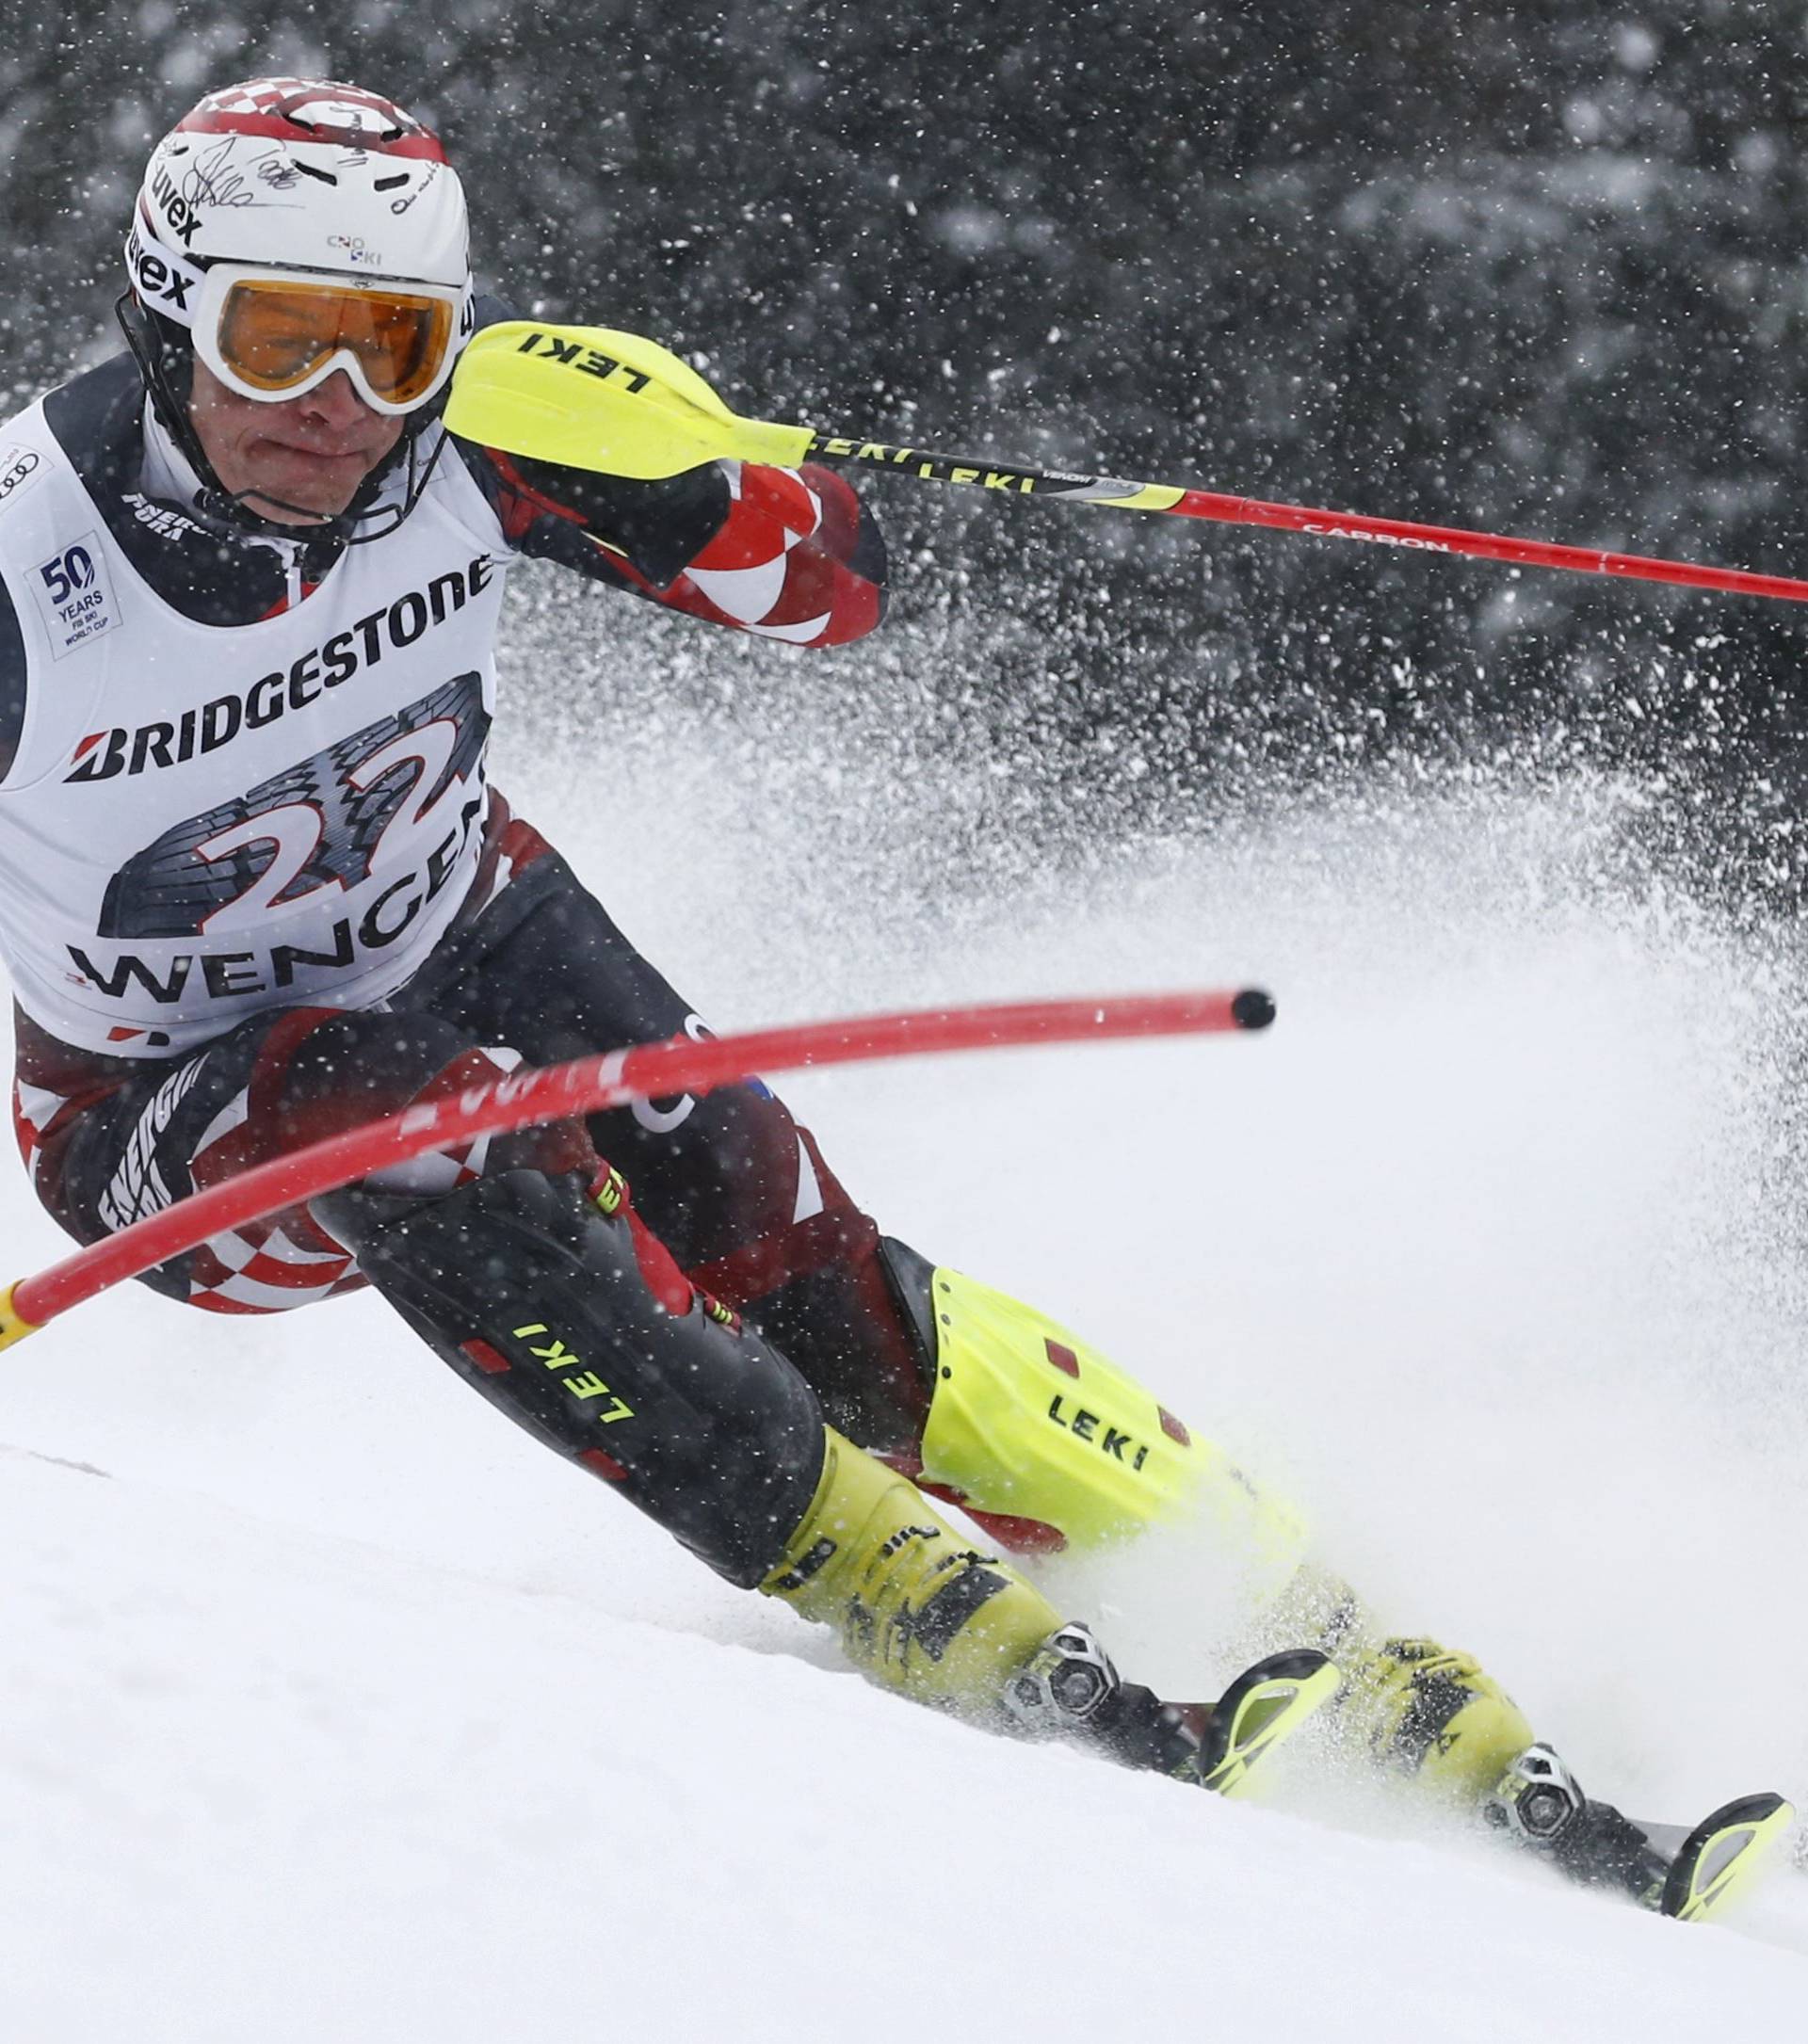 Alpine Skiing - FIS Alpine Skiing World Cup - Men's Super Combined